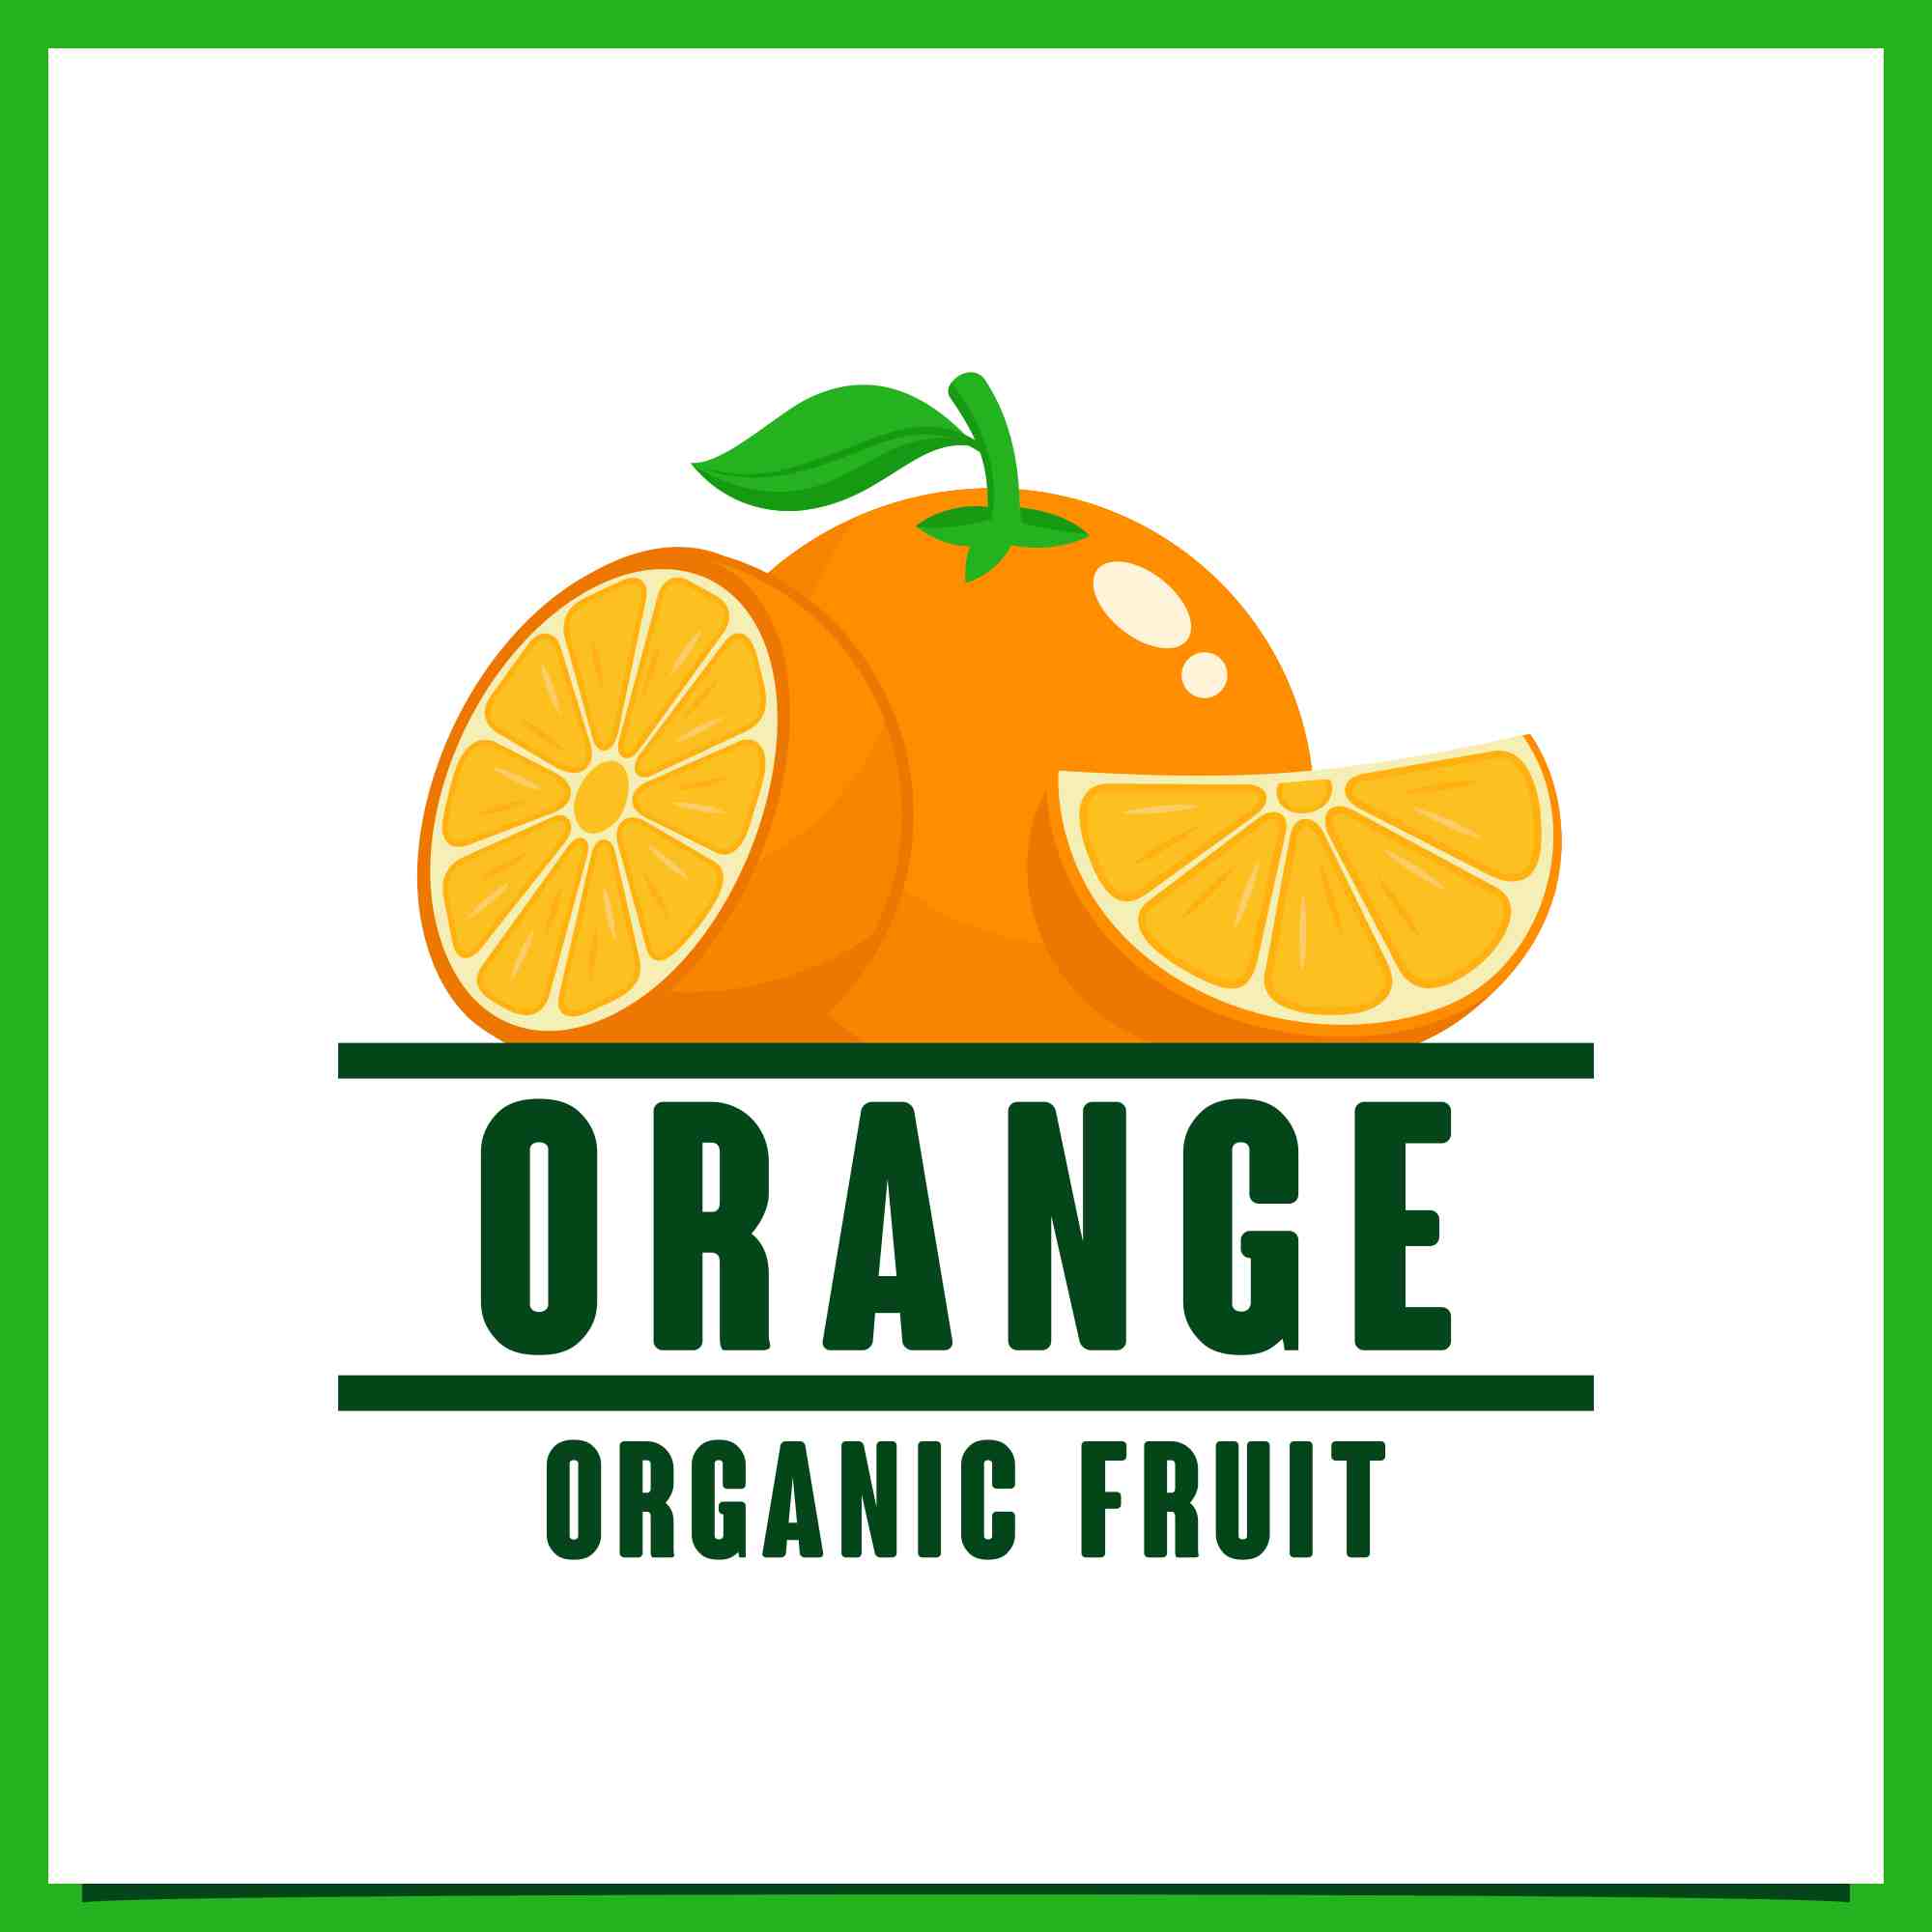 orange fruit fram fresh logo collection 4 810